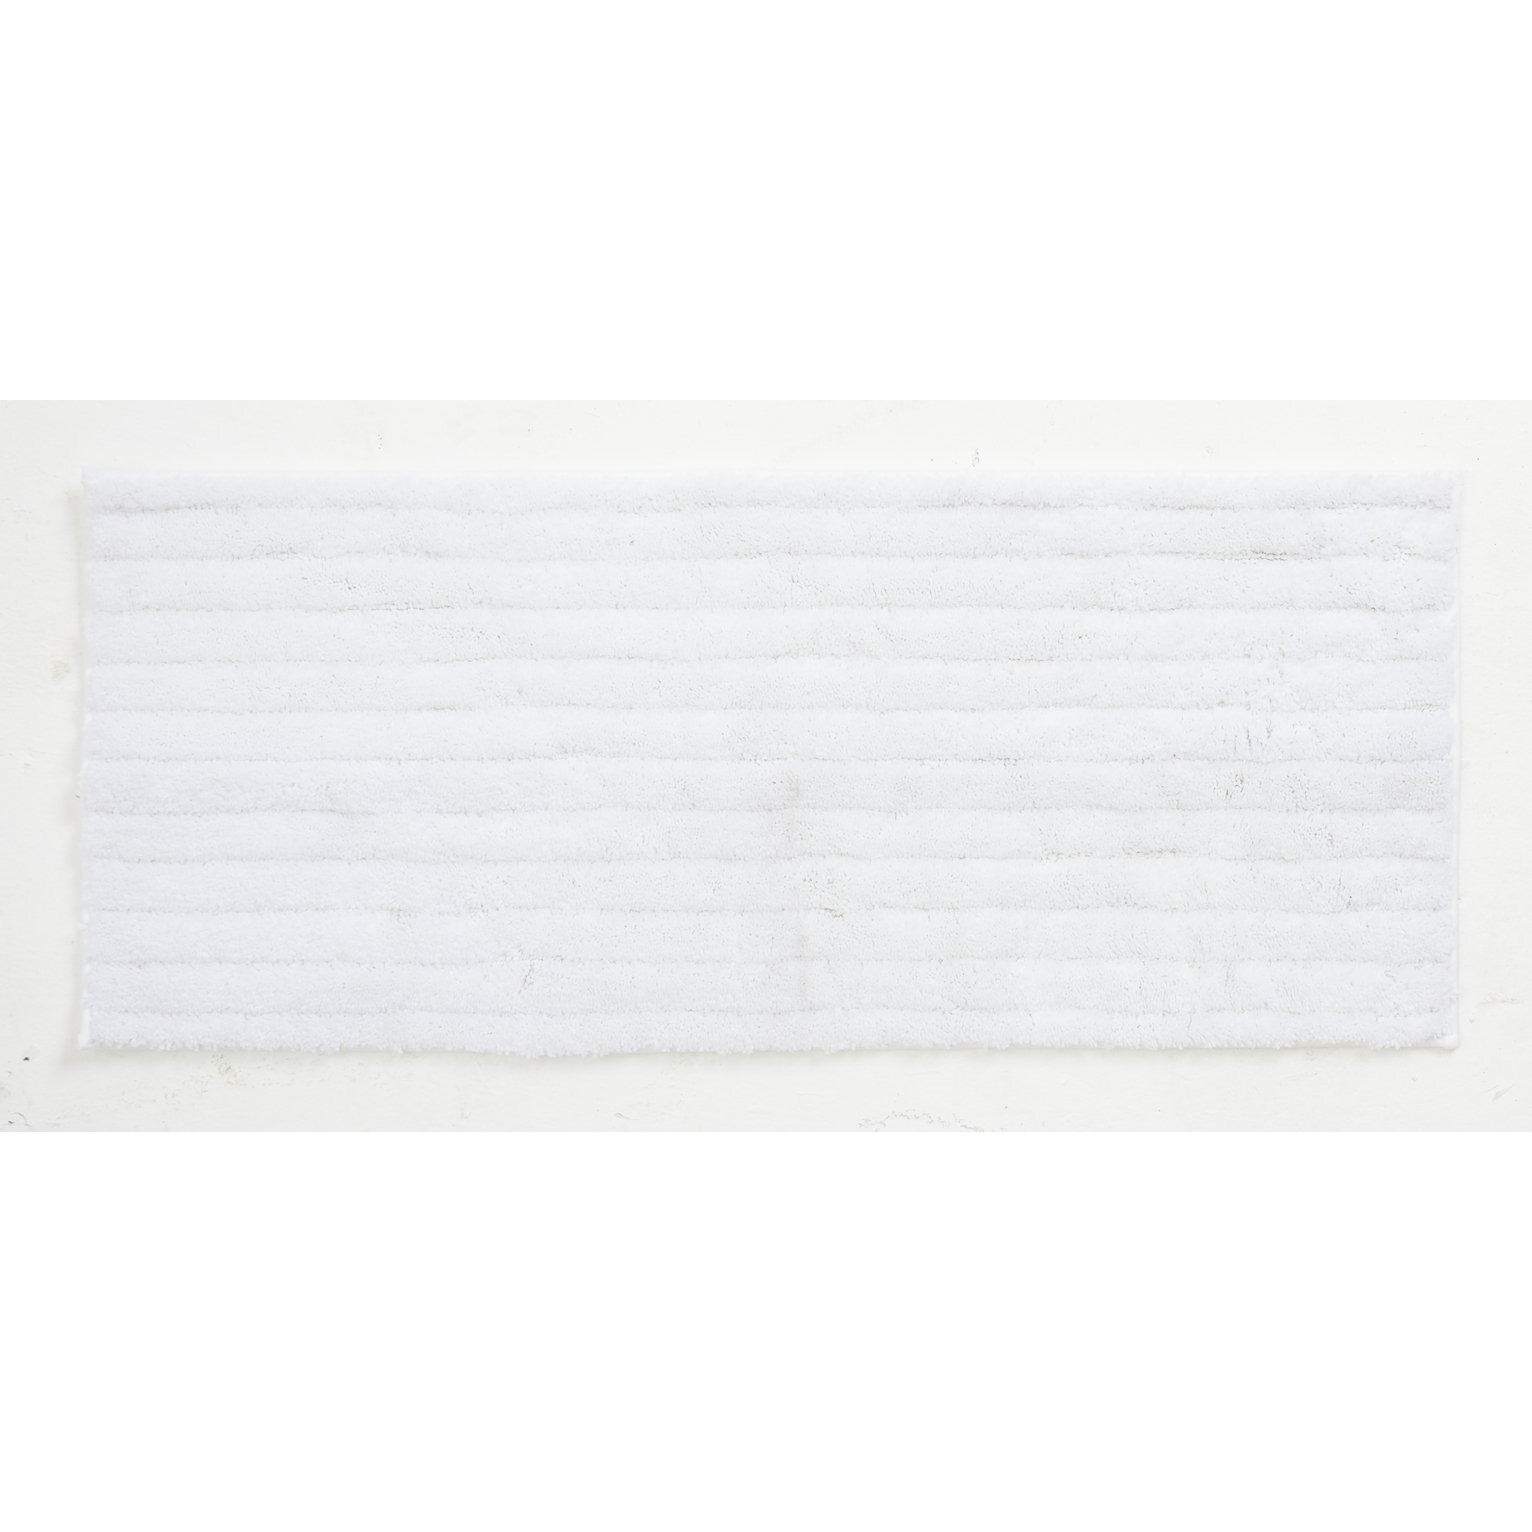 Habitat Plain Cotton Deep Pile Bath Runner- White- 40x100cm - image 1